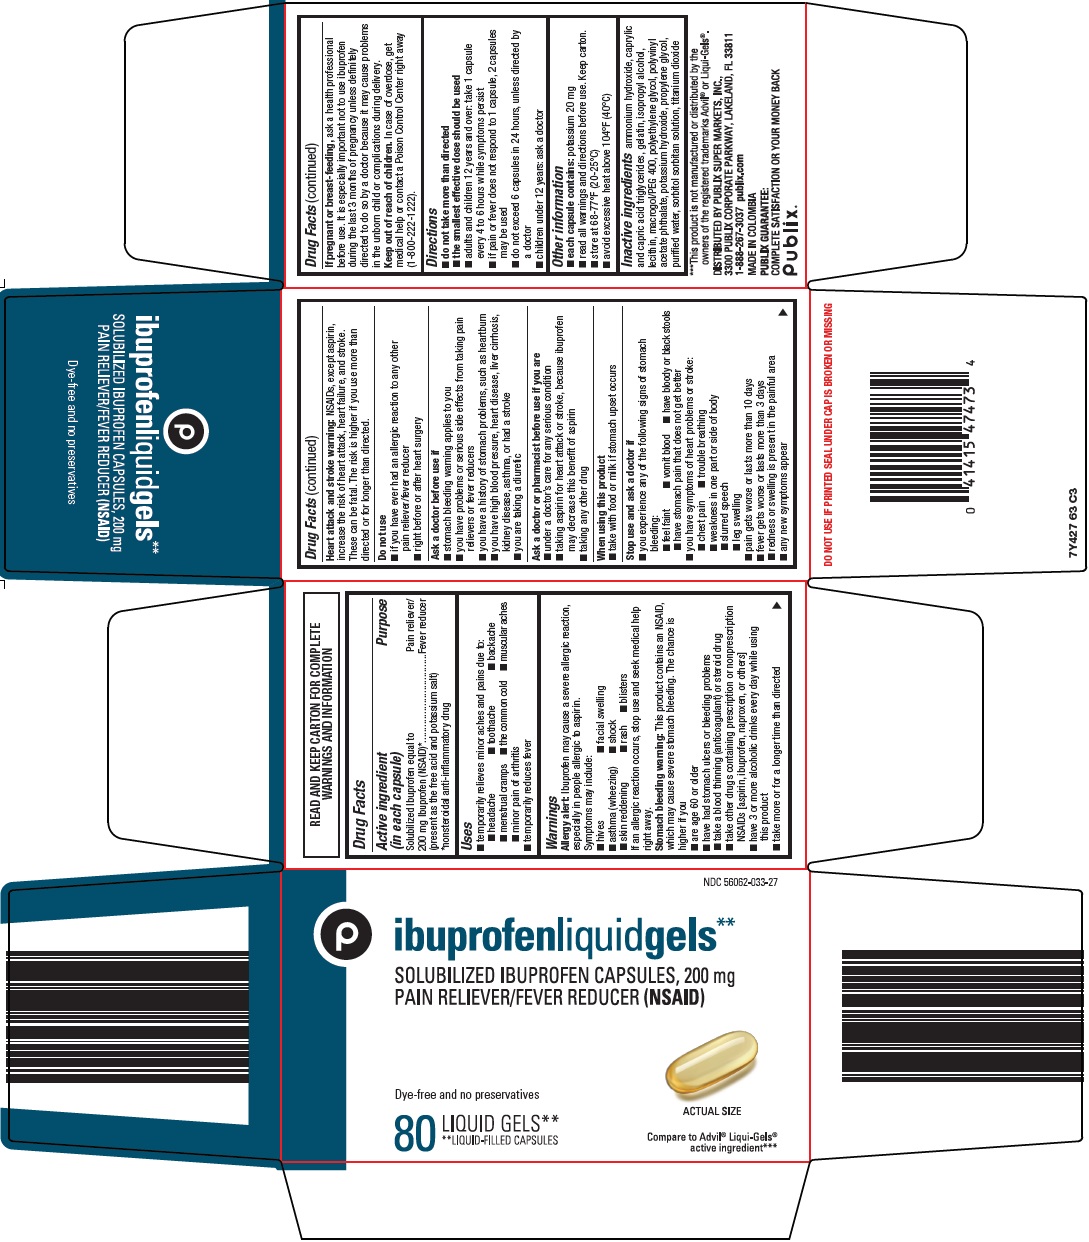 7y4-63-ibuprofen-liquid-gels.jpg